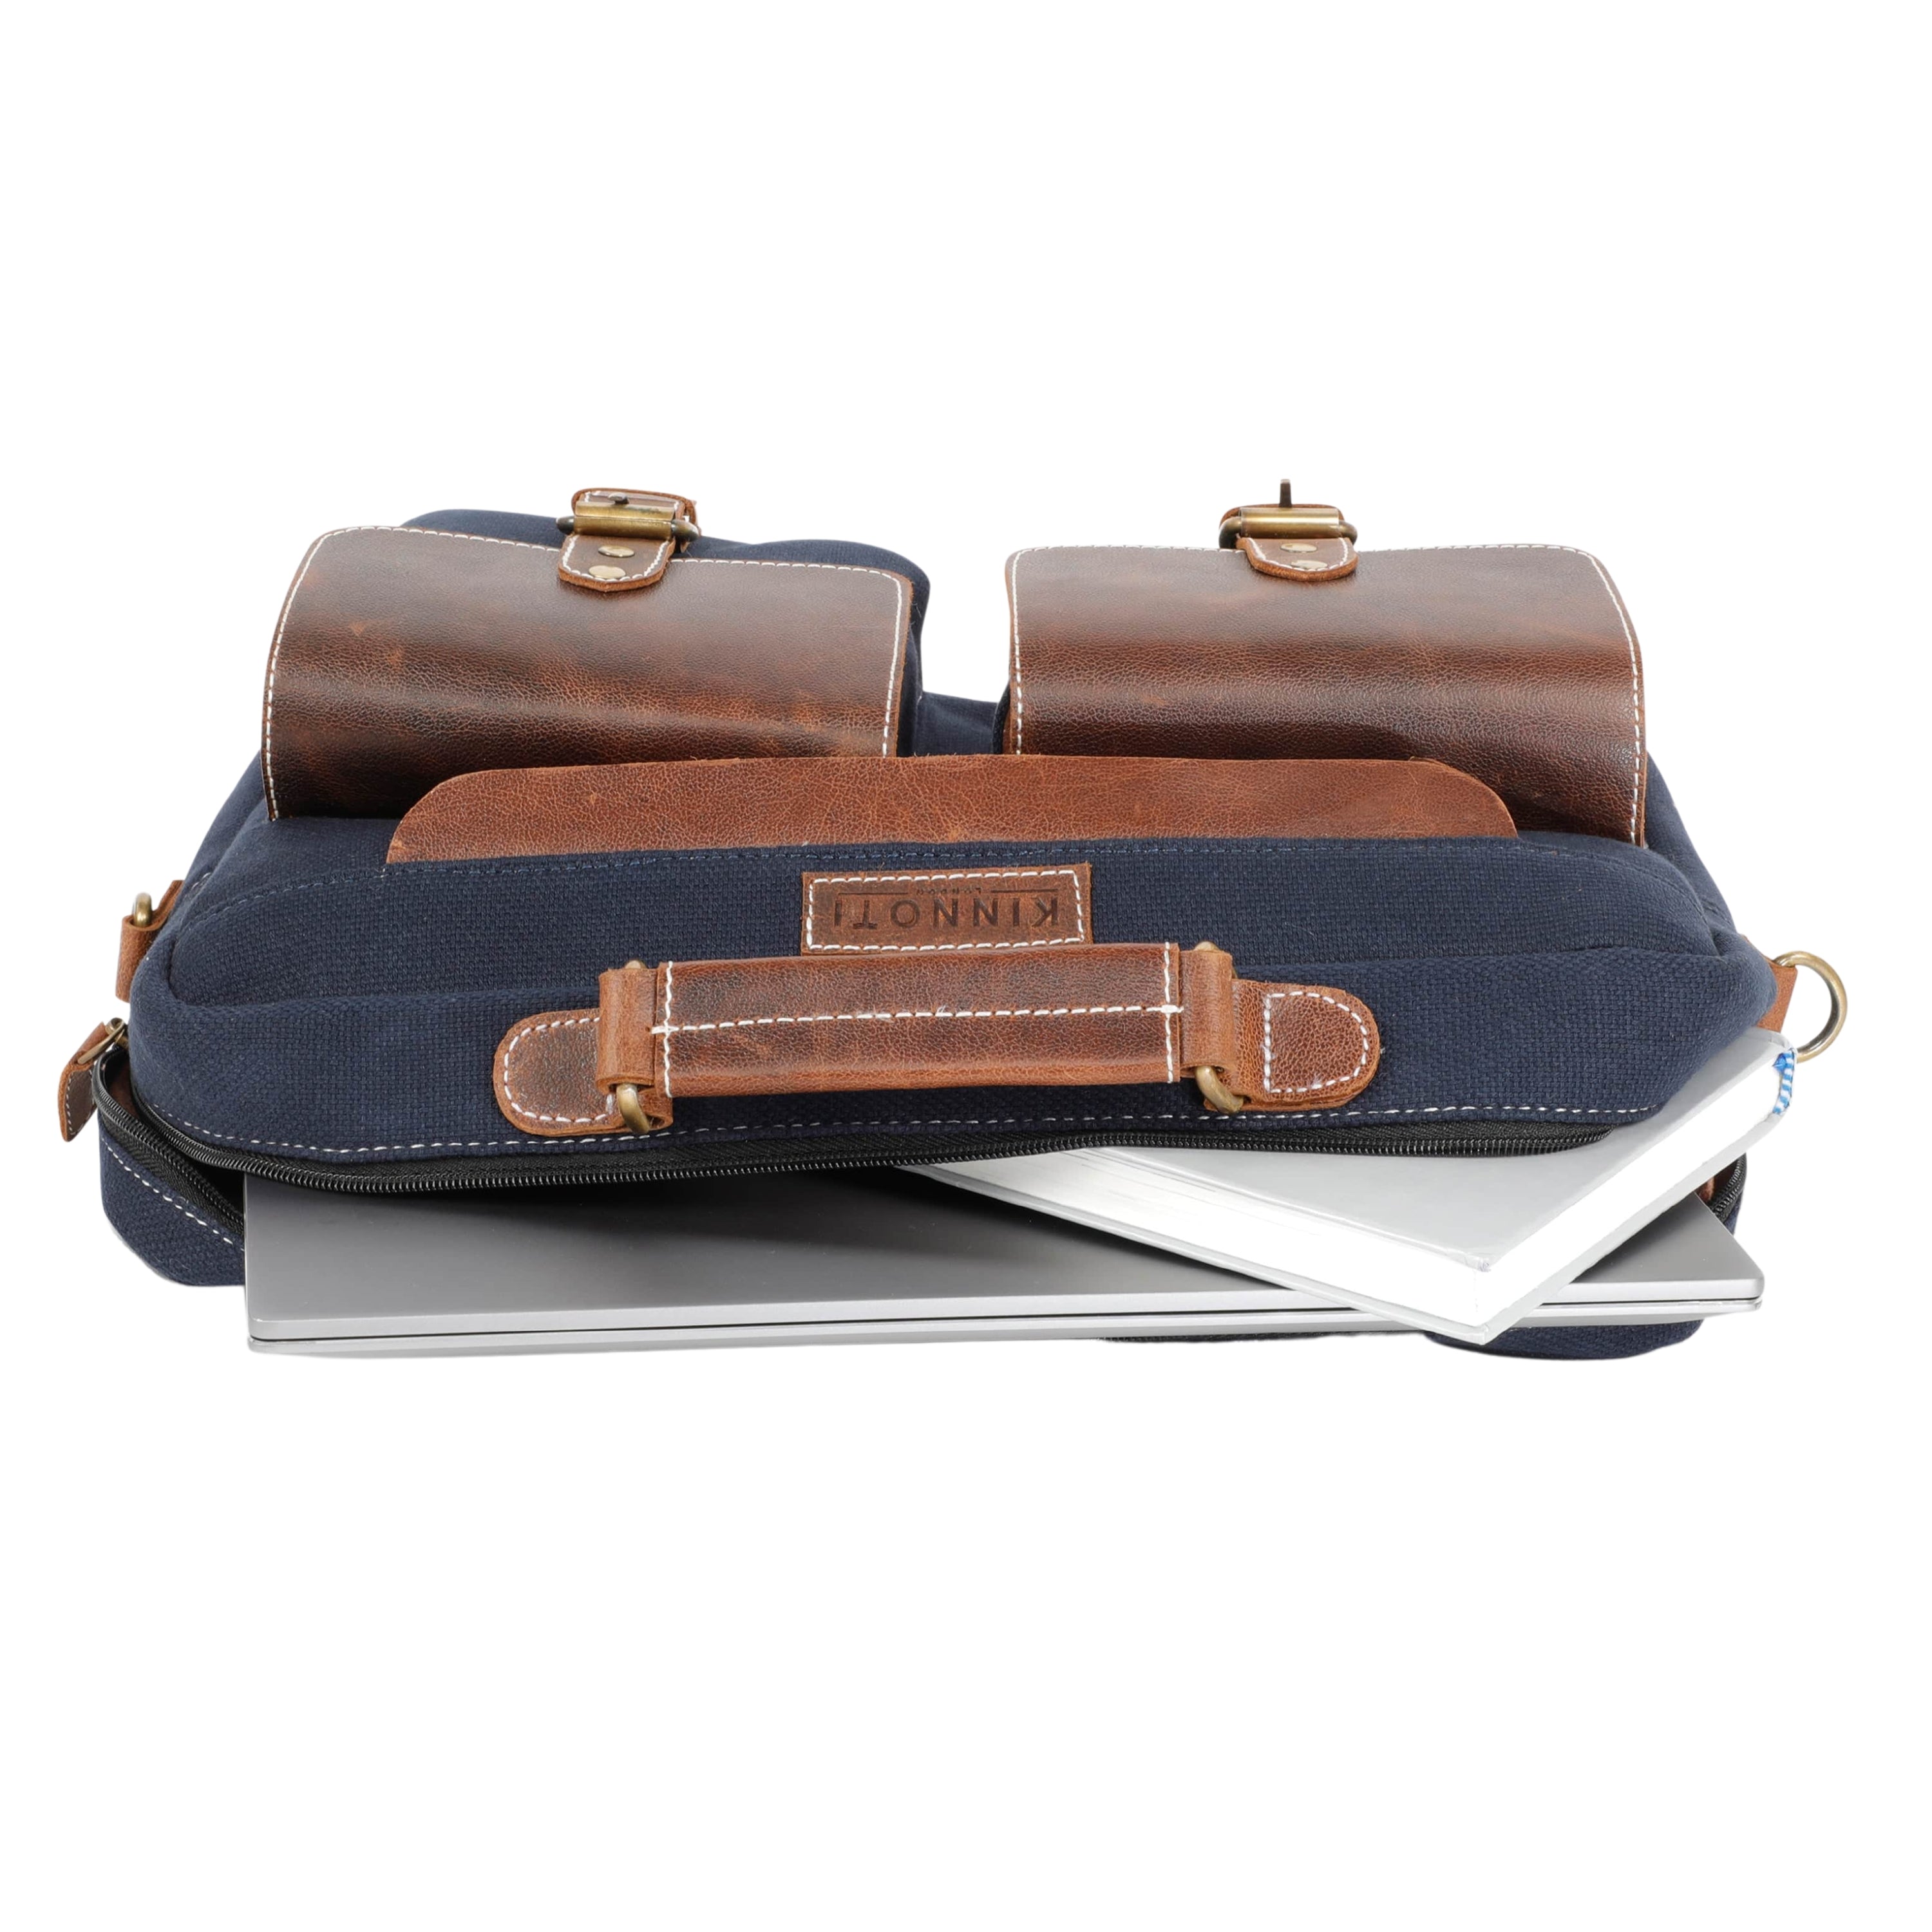 Hender Vegan Leather Laptop Bag with Adjustable Shoulder Strap, Water Proof and Dust Resistant